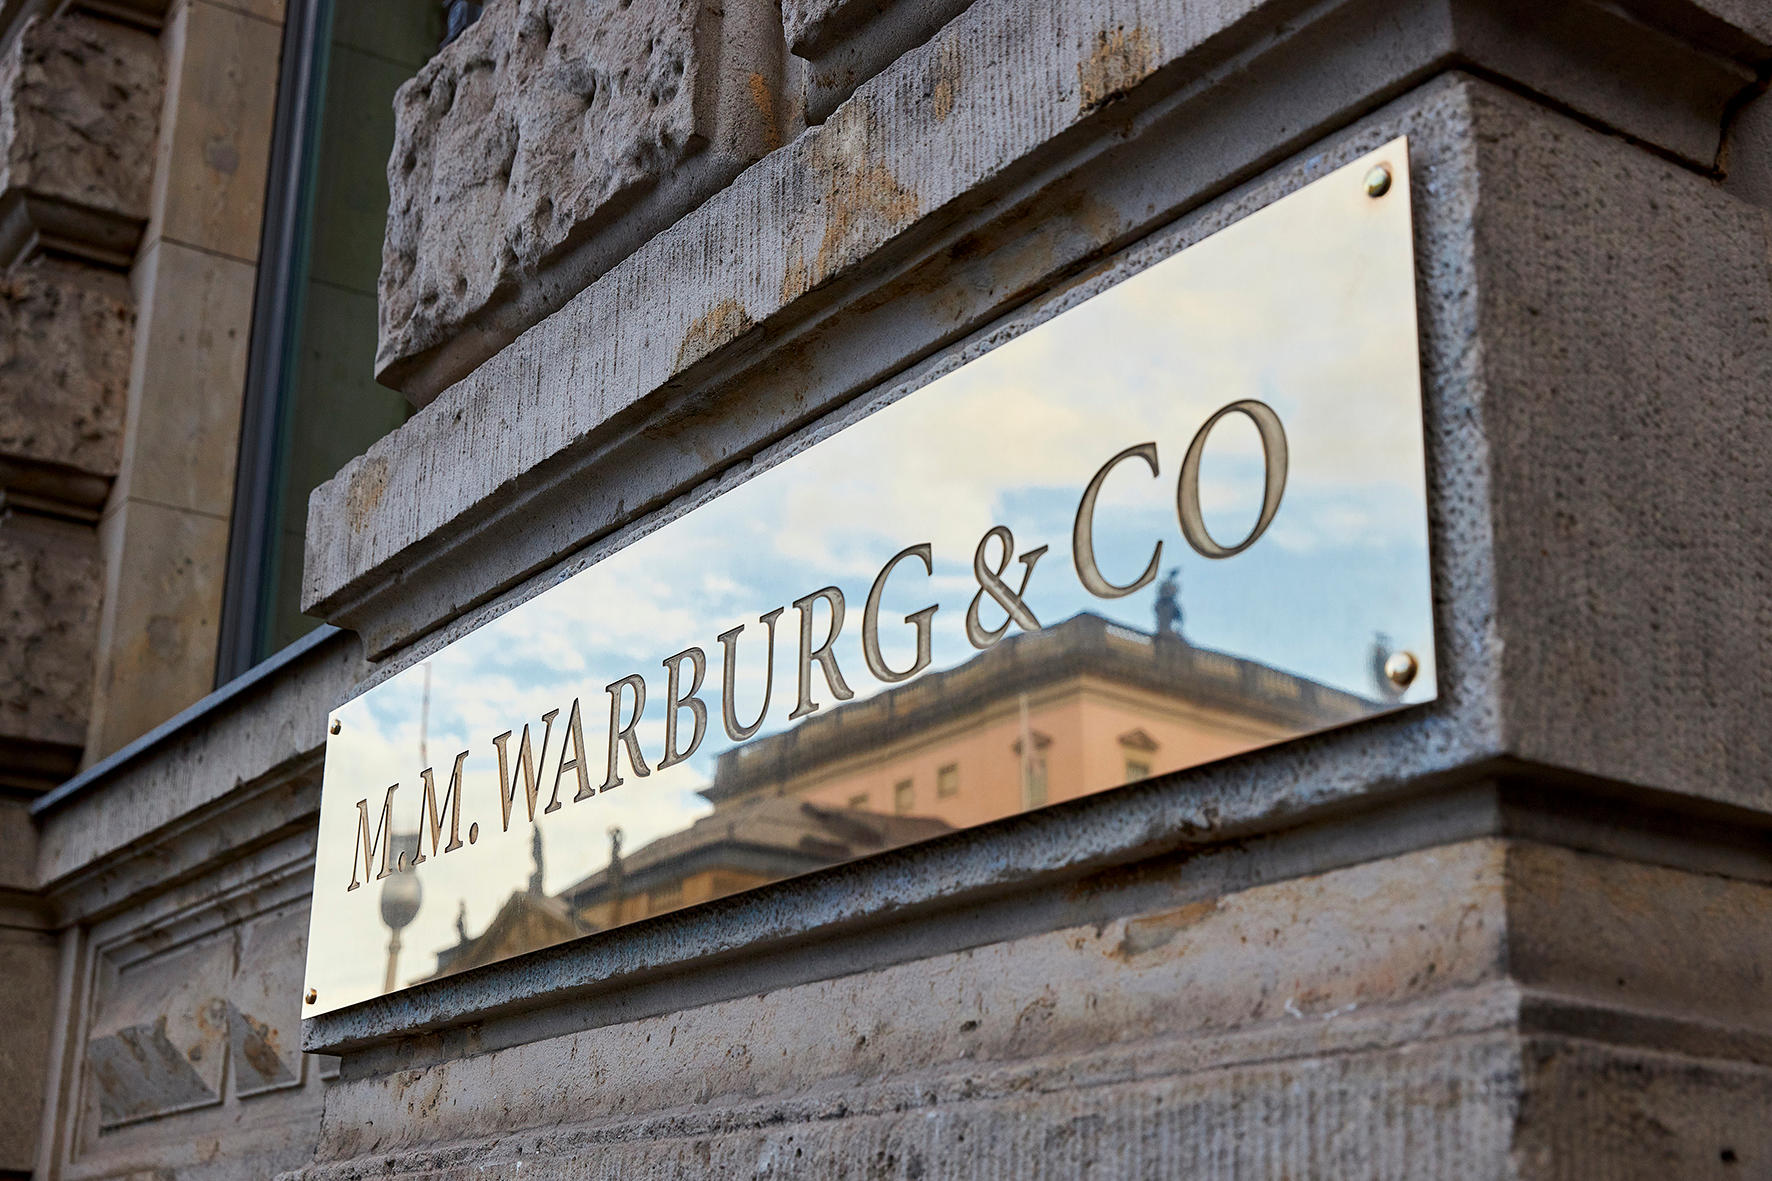 M.M.Warburg & CO Berlin, Behrenstraße 36 in Berlin